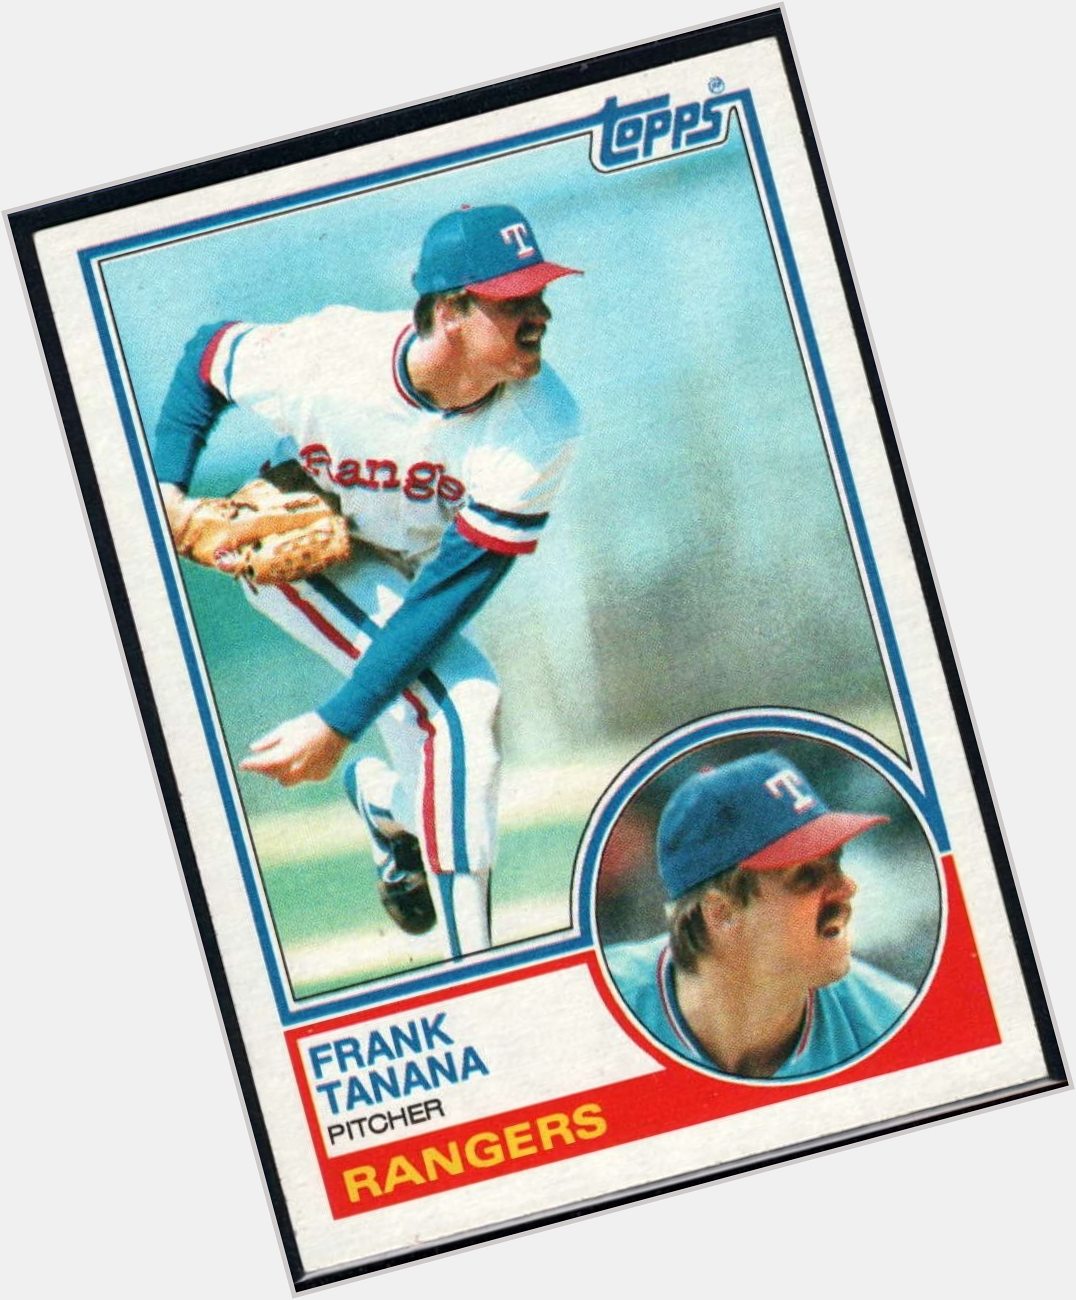 Happy birthday to former pitcher Frank Tanana. 